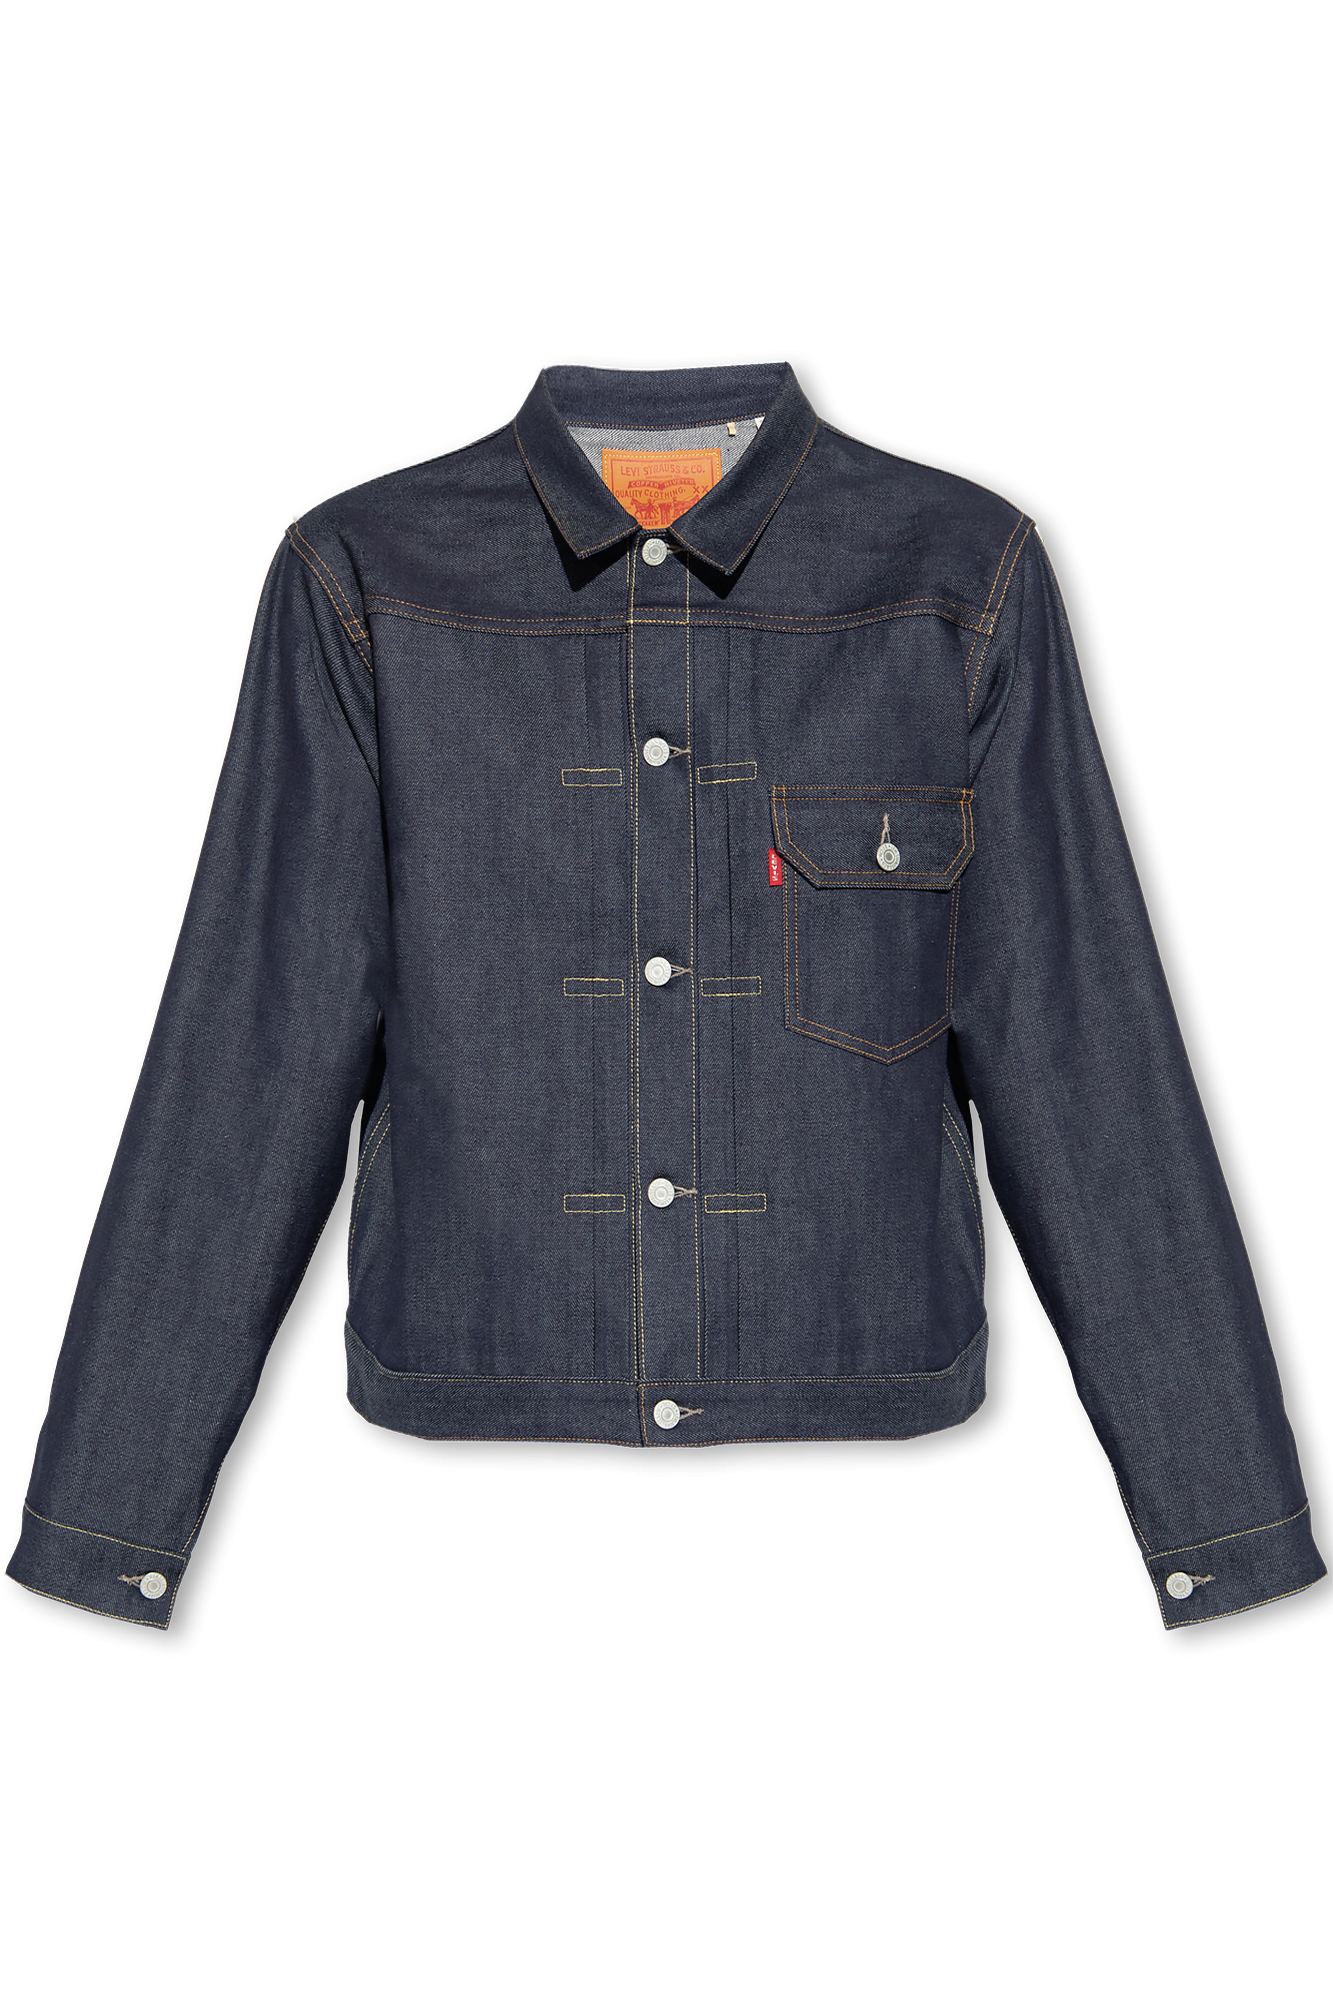 Navy blue '1936 Type 1' denim jacket from 'Vintage Clothing